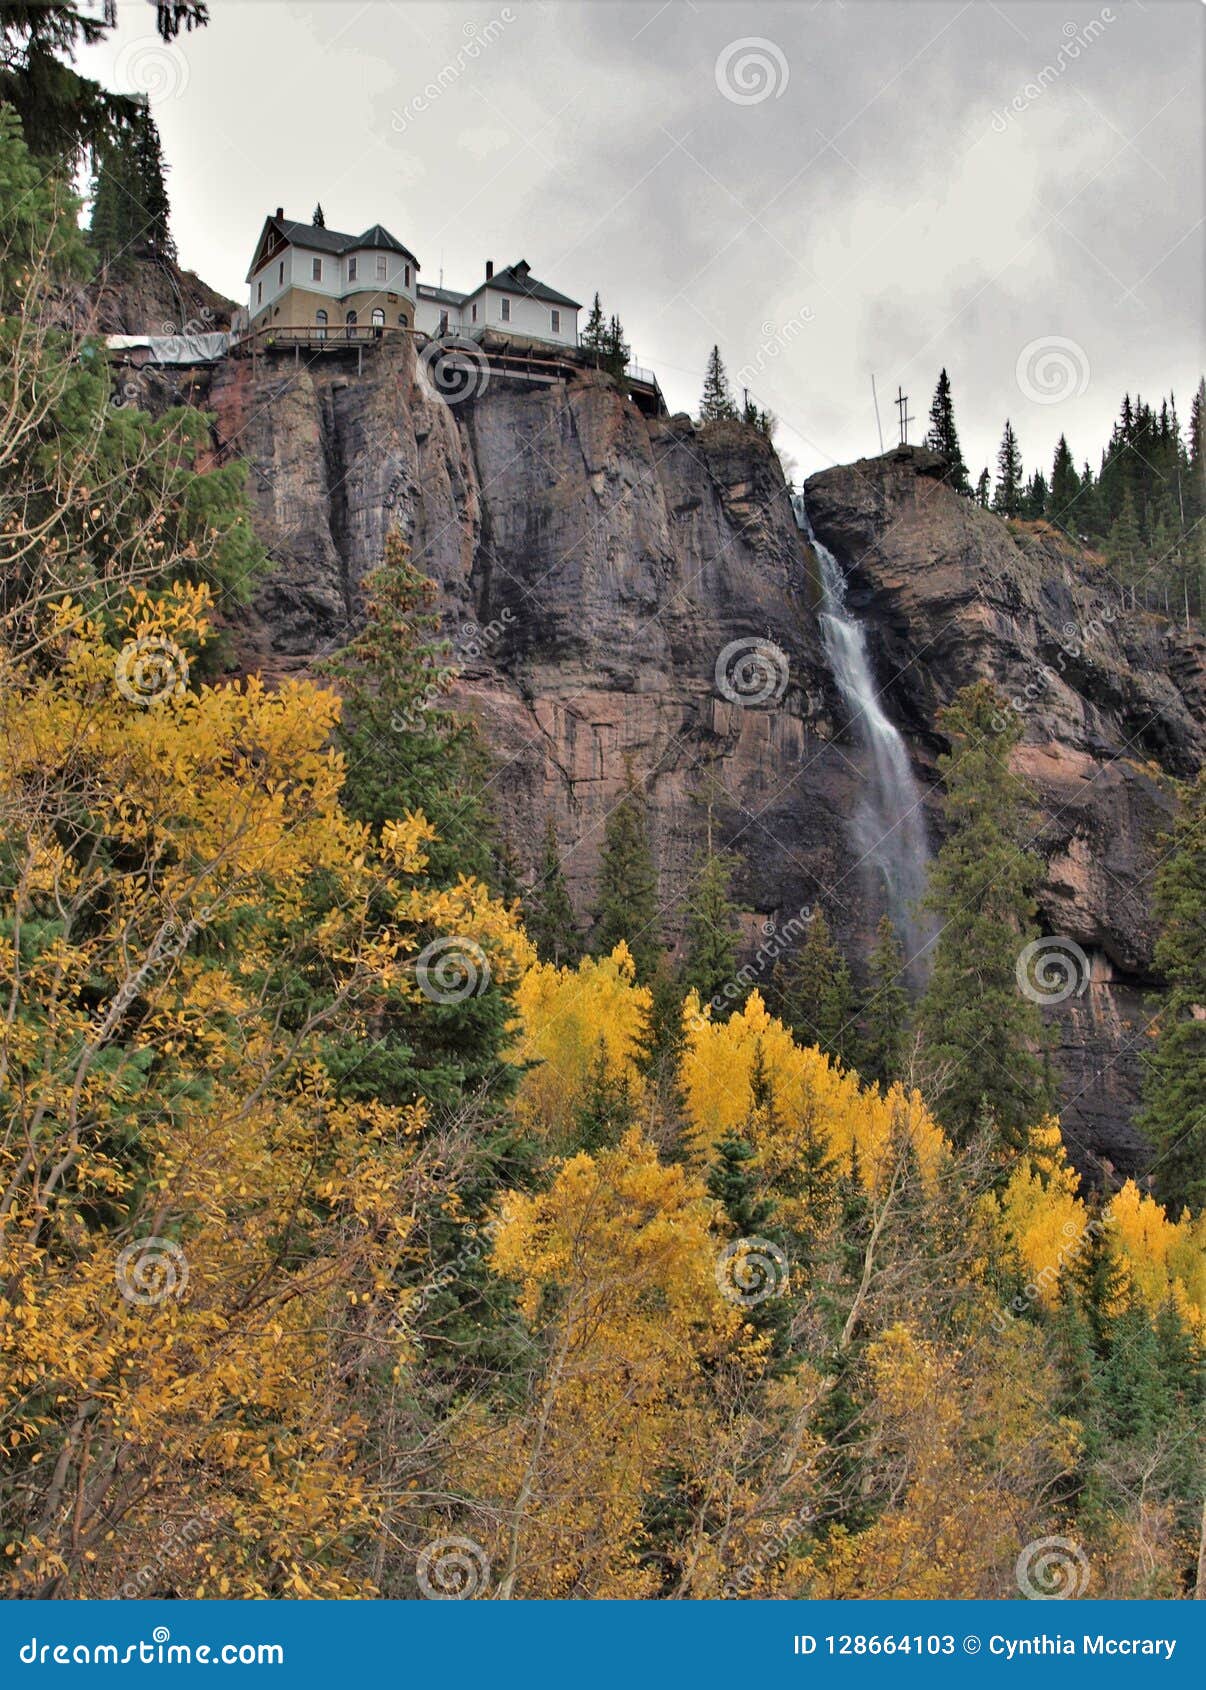 Bridal Veil Falls In Telluride Colorado Stock Image Image Of Foliage Telluride